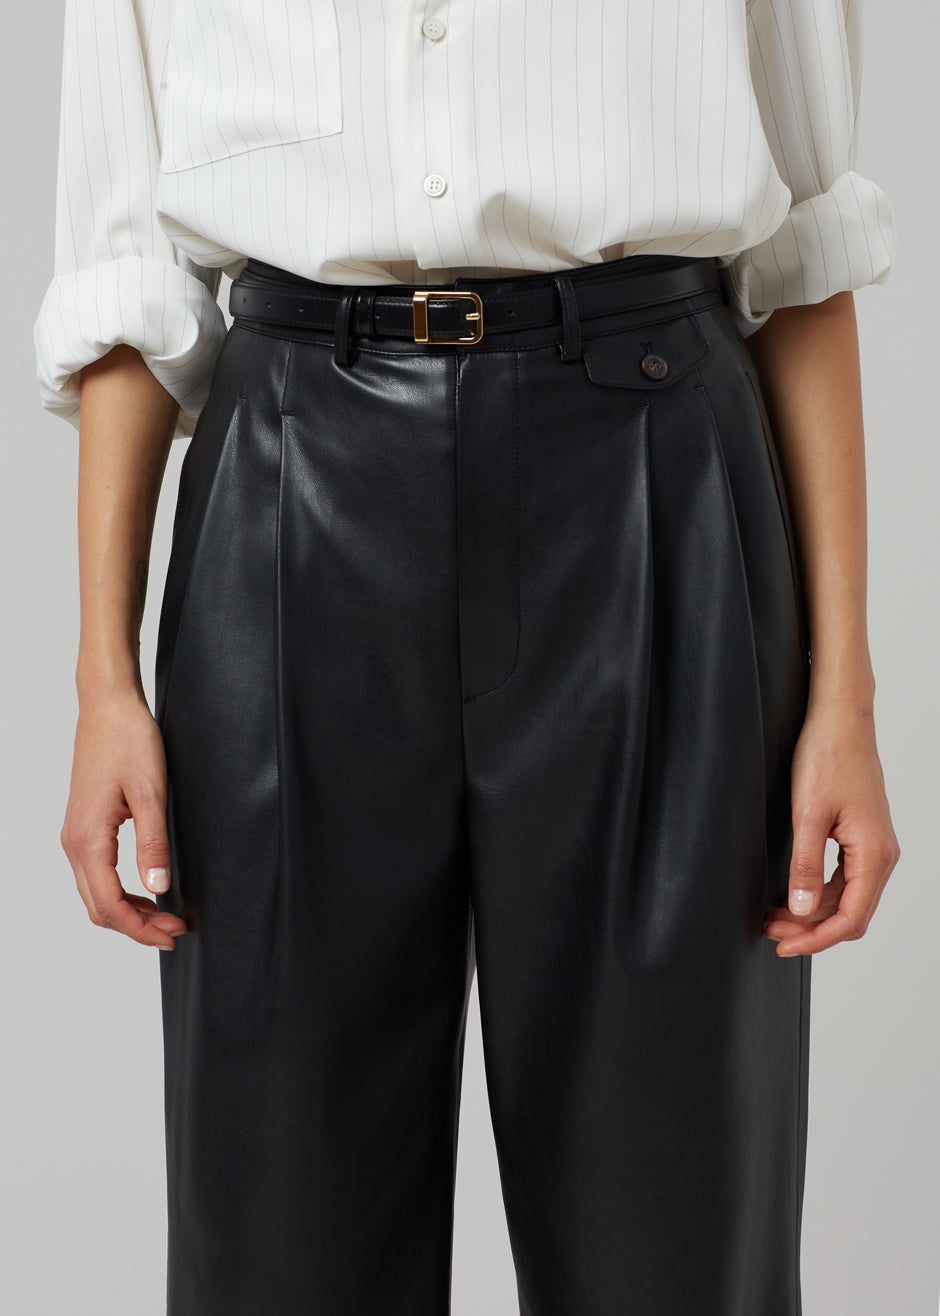 Pernille Faux Leather Pants - Black - 4